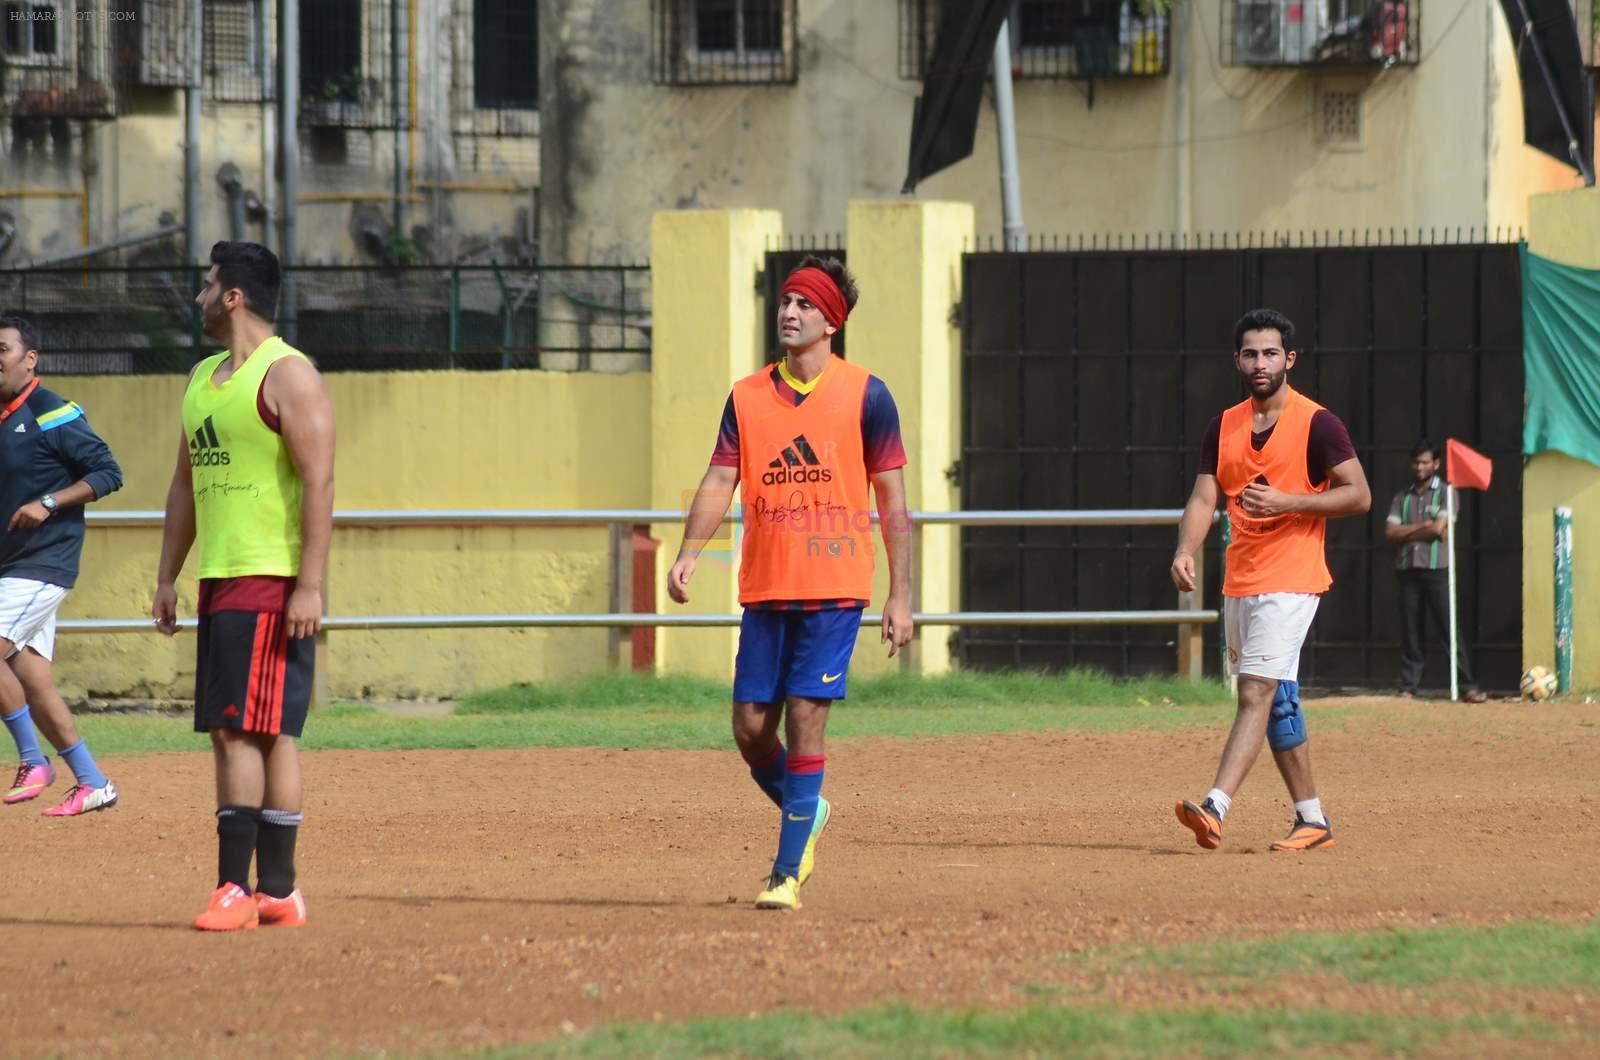 Arjun Kapoor, Ranbir Kapoor snapped at a friendly soccer match in Mumbai on 5th July 2015